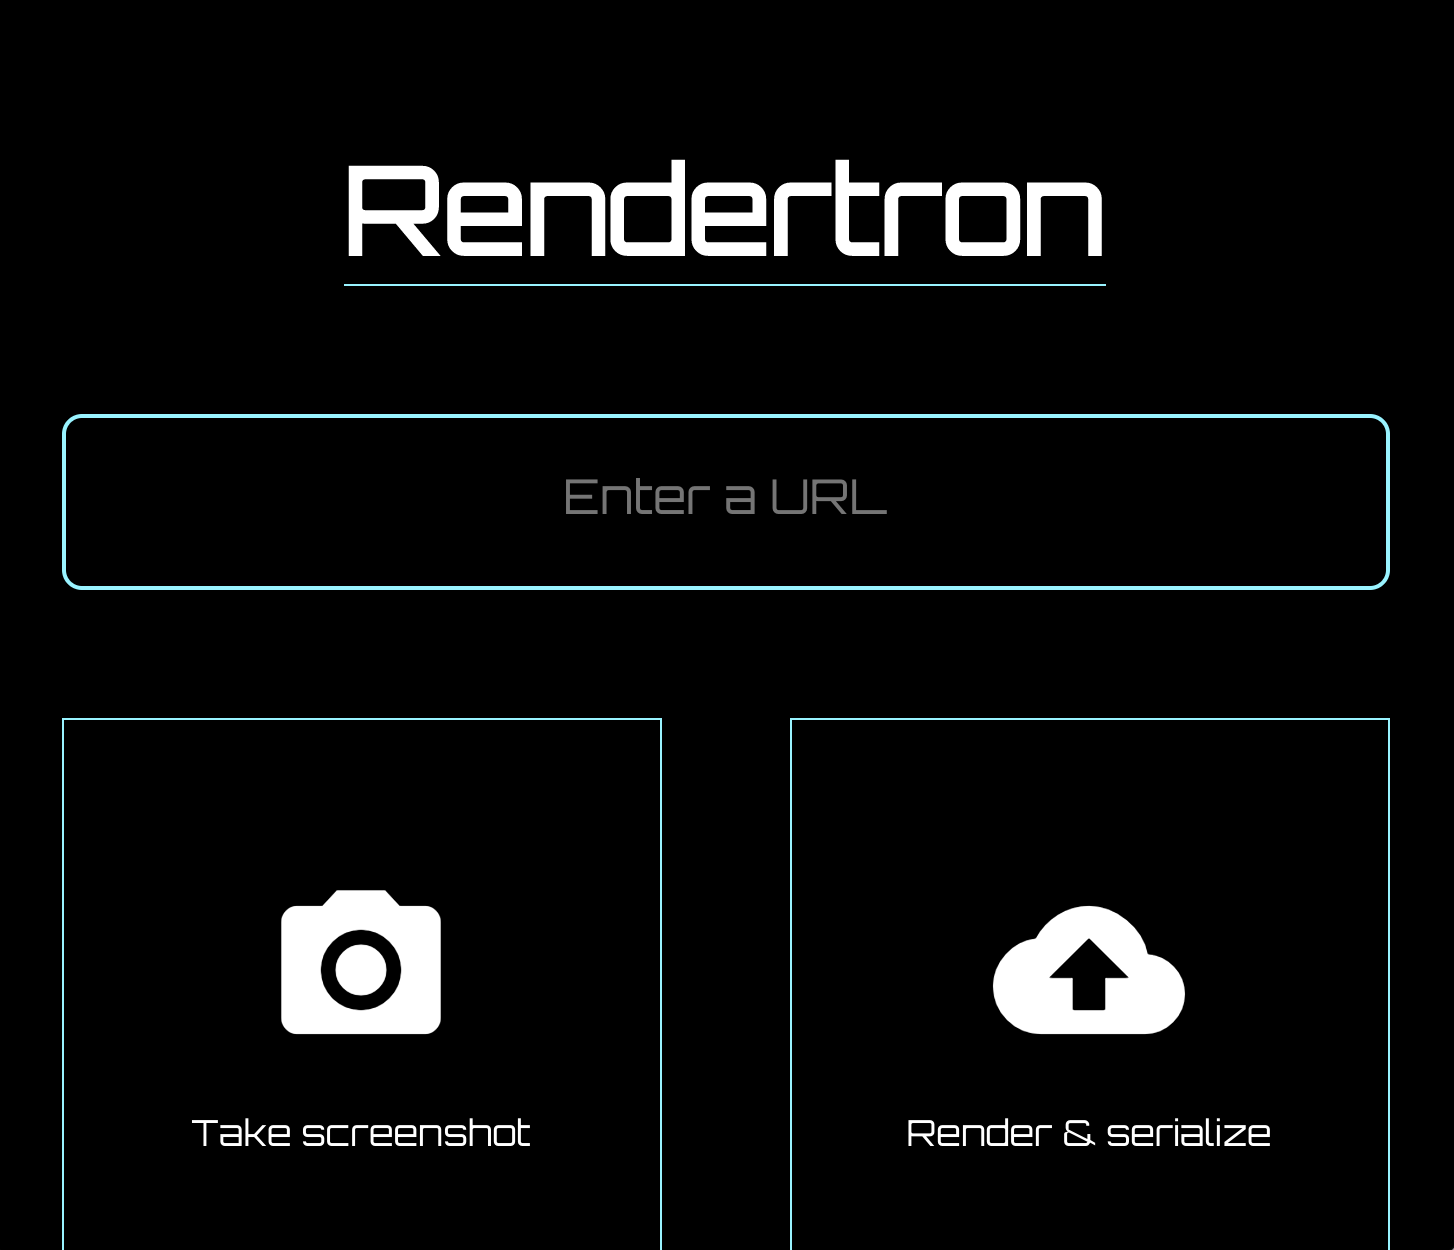 Rendertron's UI after deploying to Google Cloud Platform